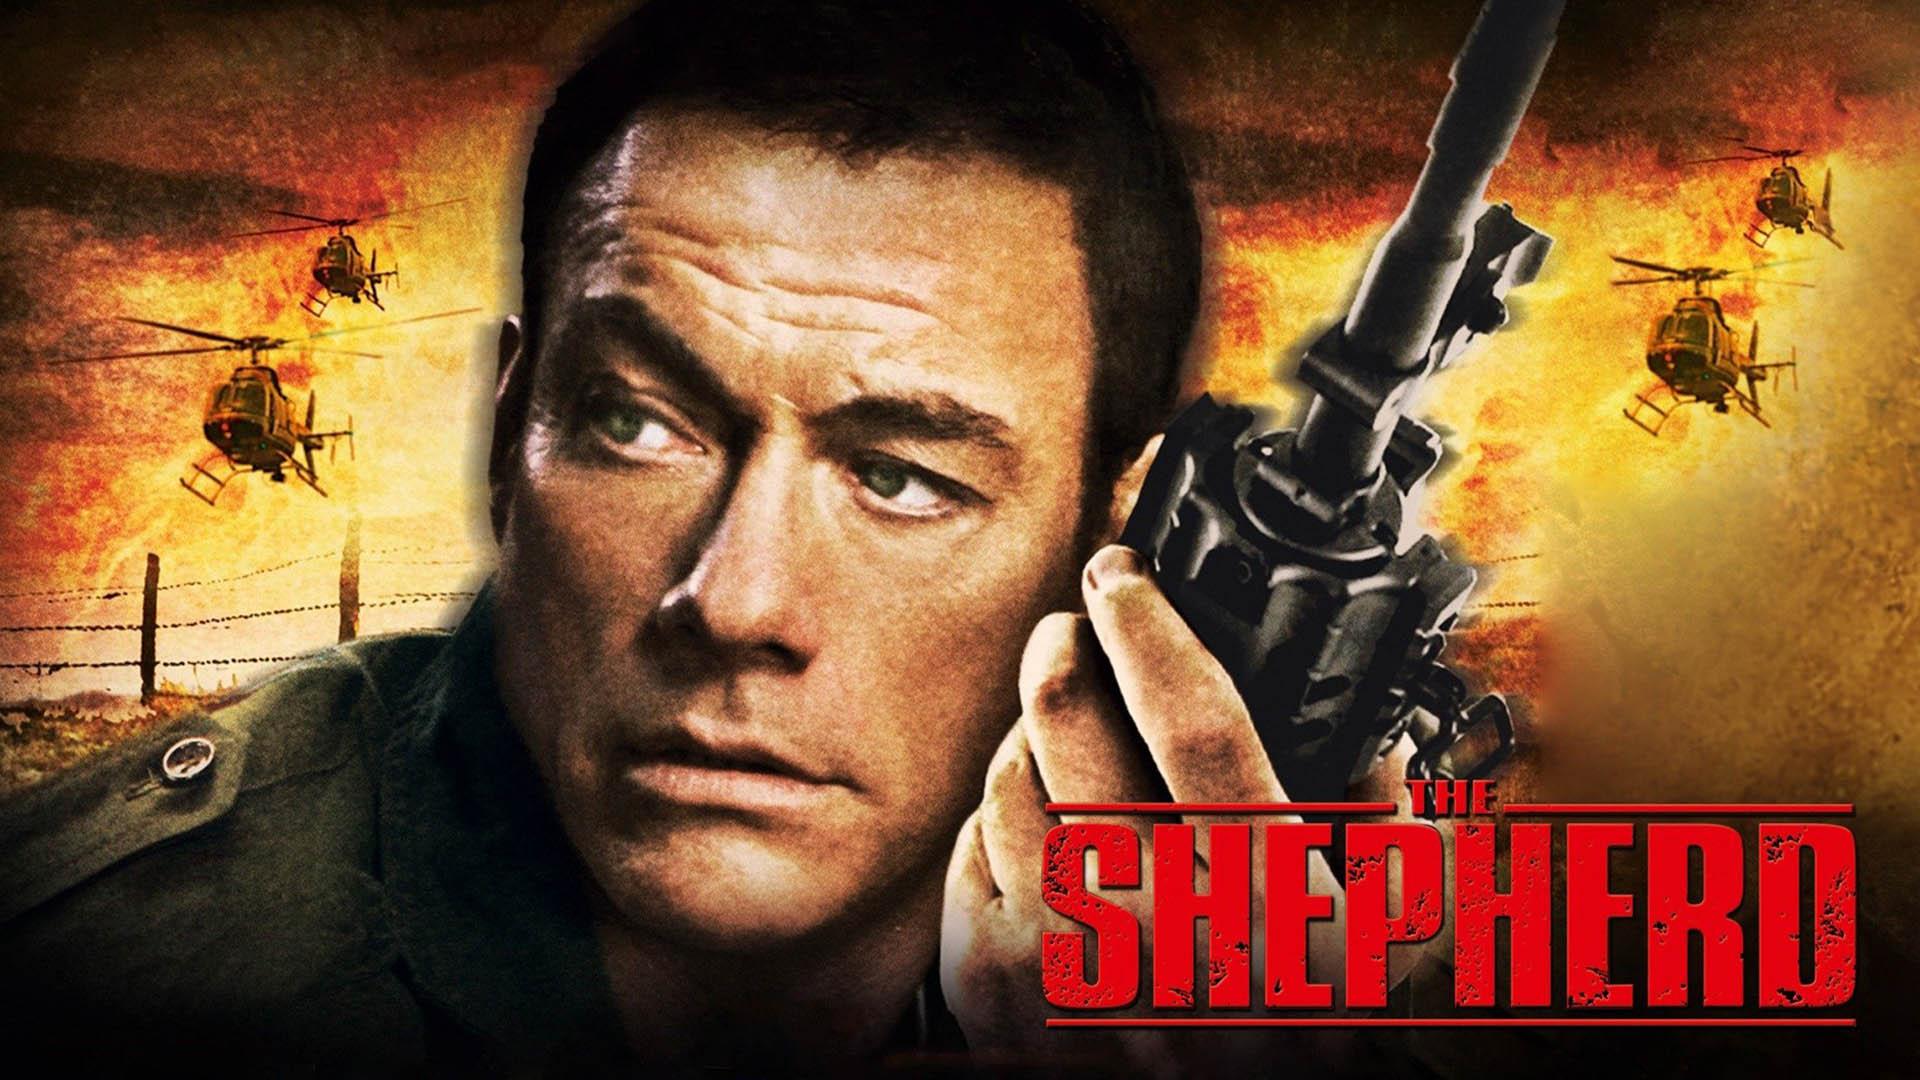 Movie cover of The Shepherd: Border Patrol